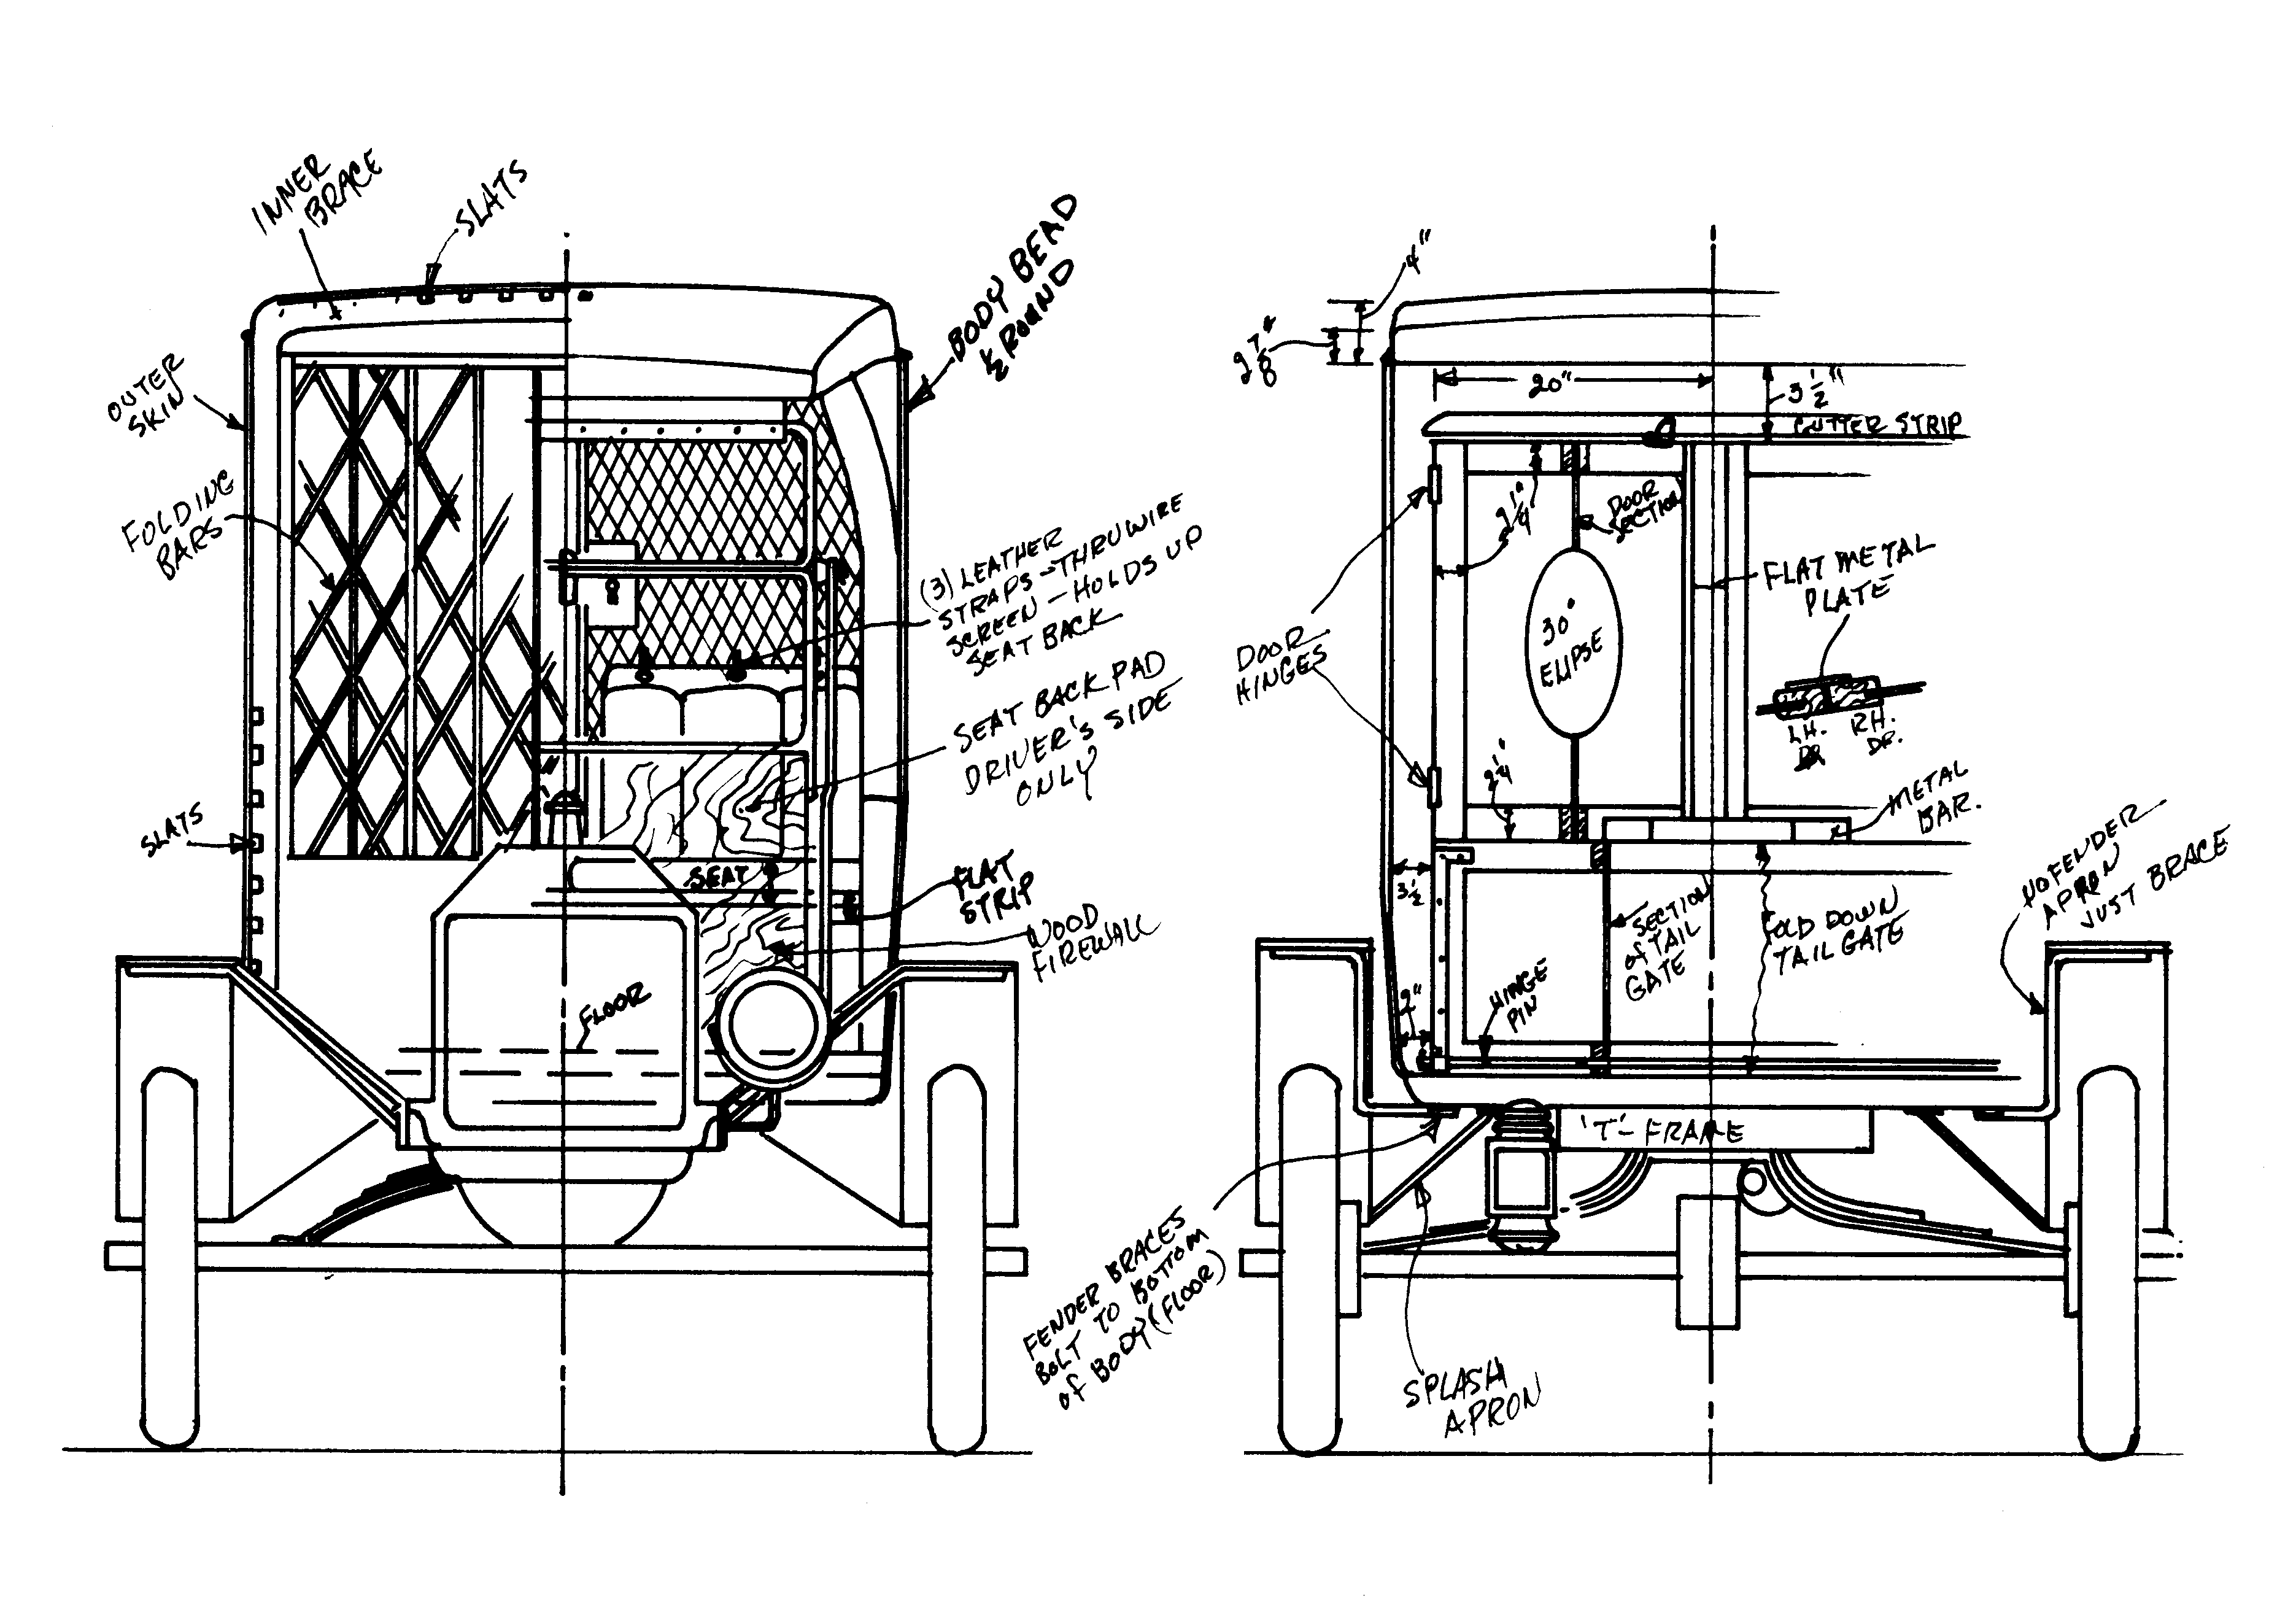 Ford Model T blueprint